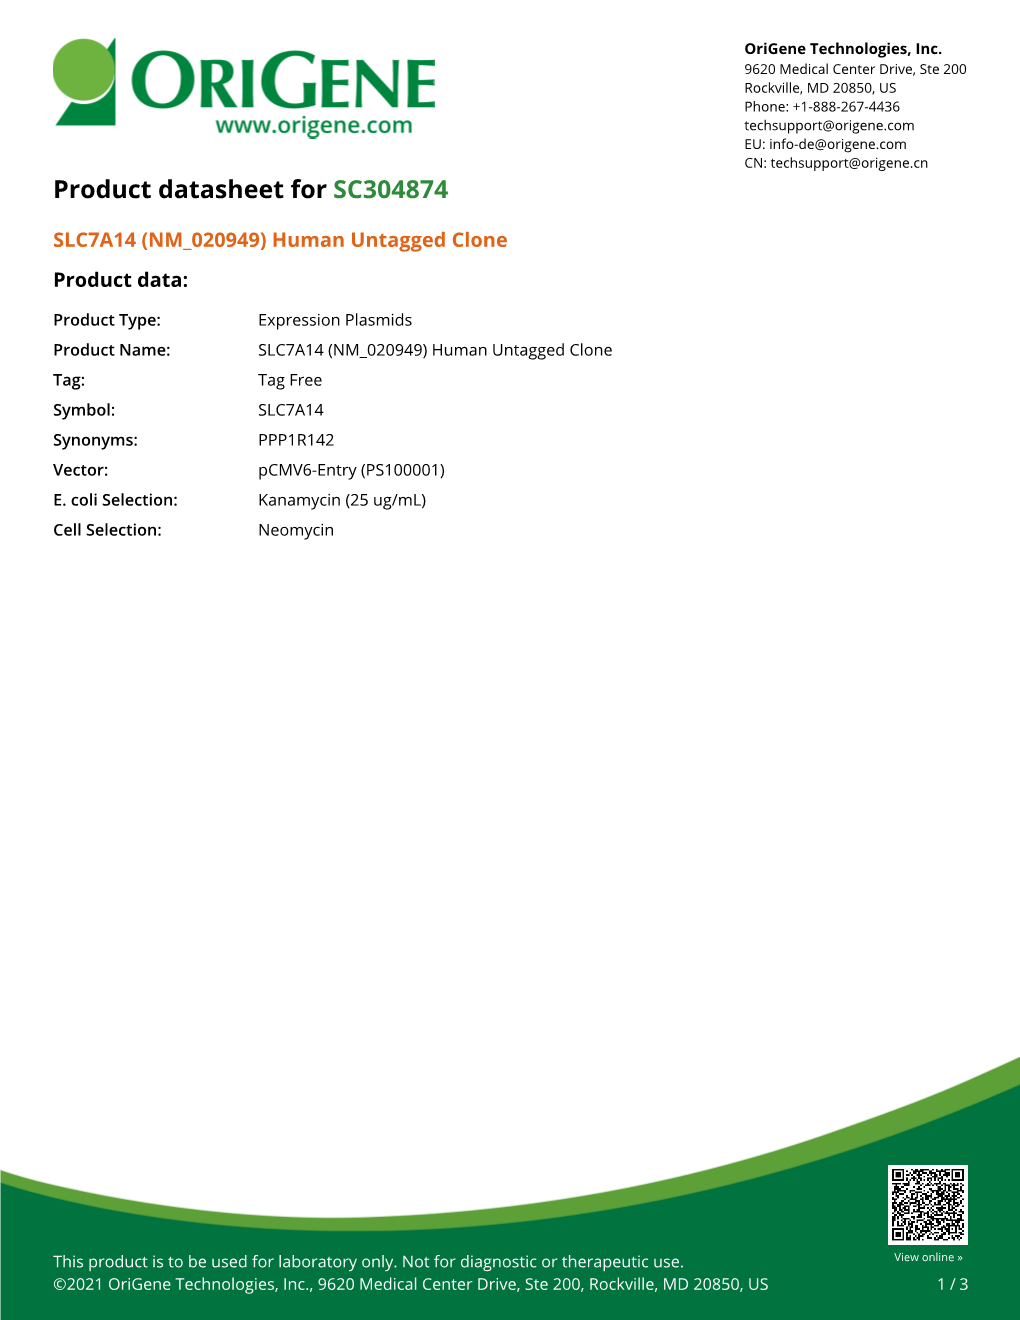 SLC7A14 (NM 020949) Human Untagged Clone Product Data